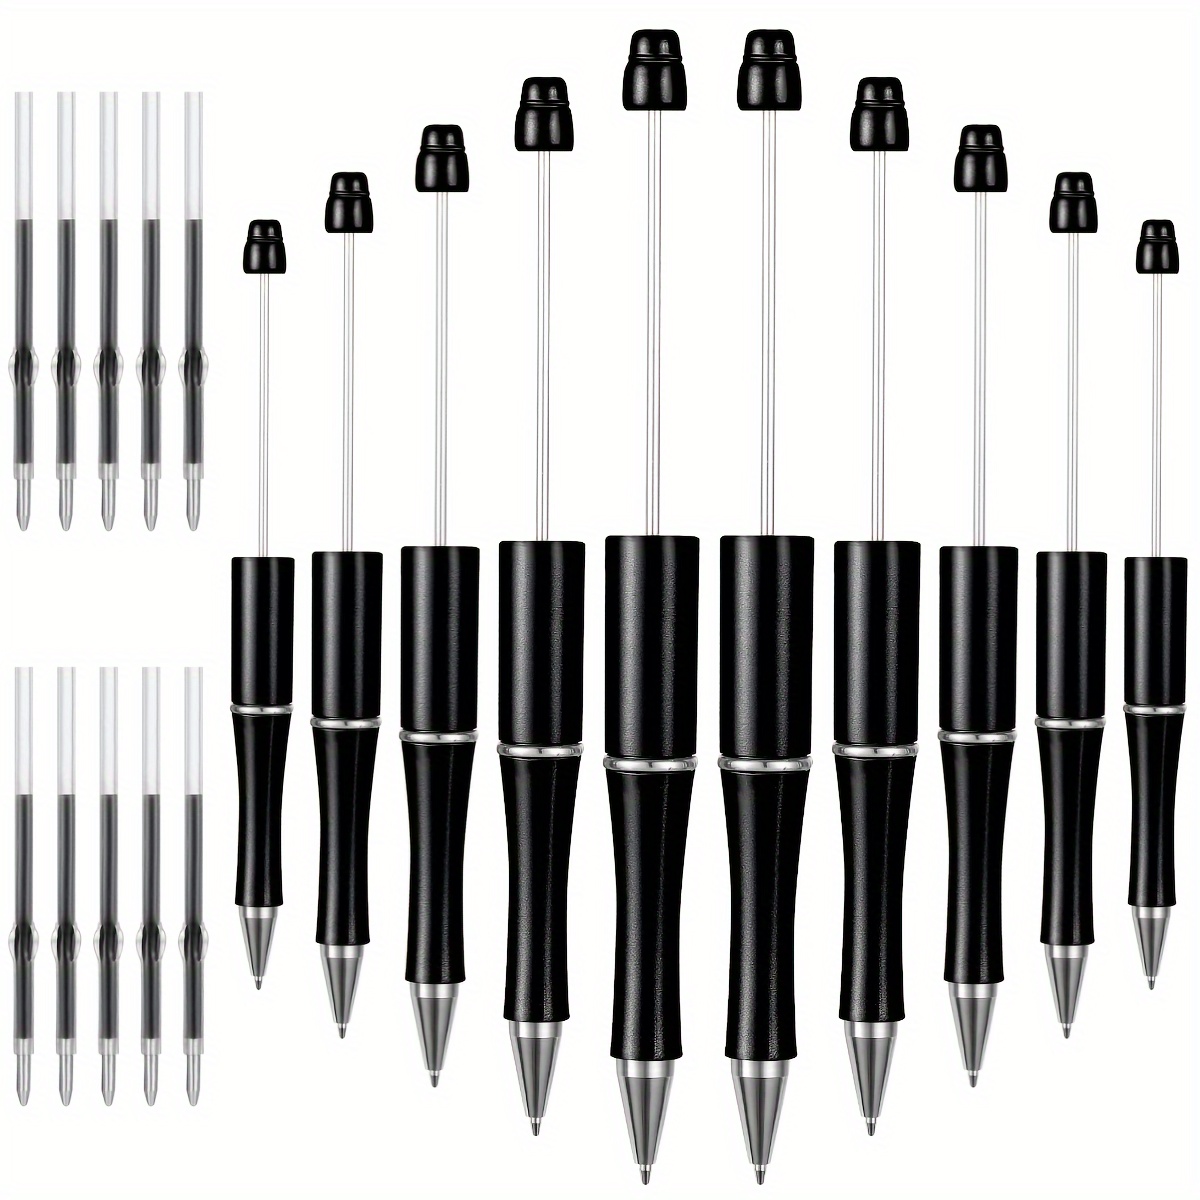 

10 Pieces Plastic Pen Bead Ballpoint Pen Assorted Bead Pen Shaft Black Ink Rollerball Pen With Extra 10 Refills Office School Supplies (black)